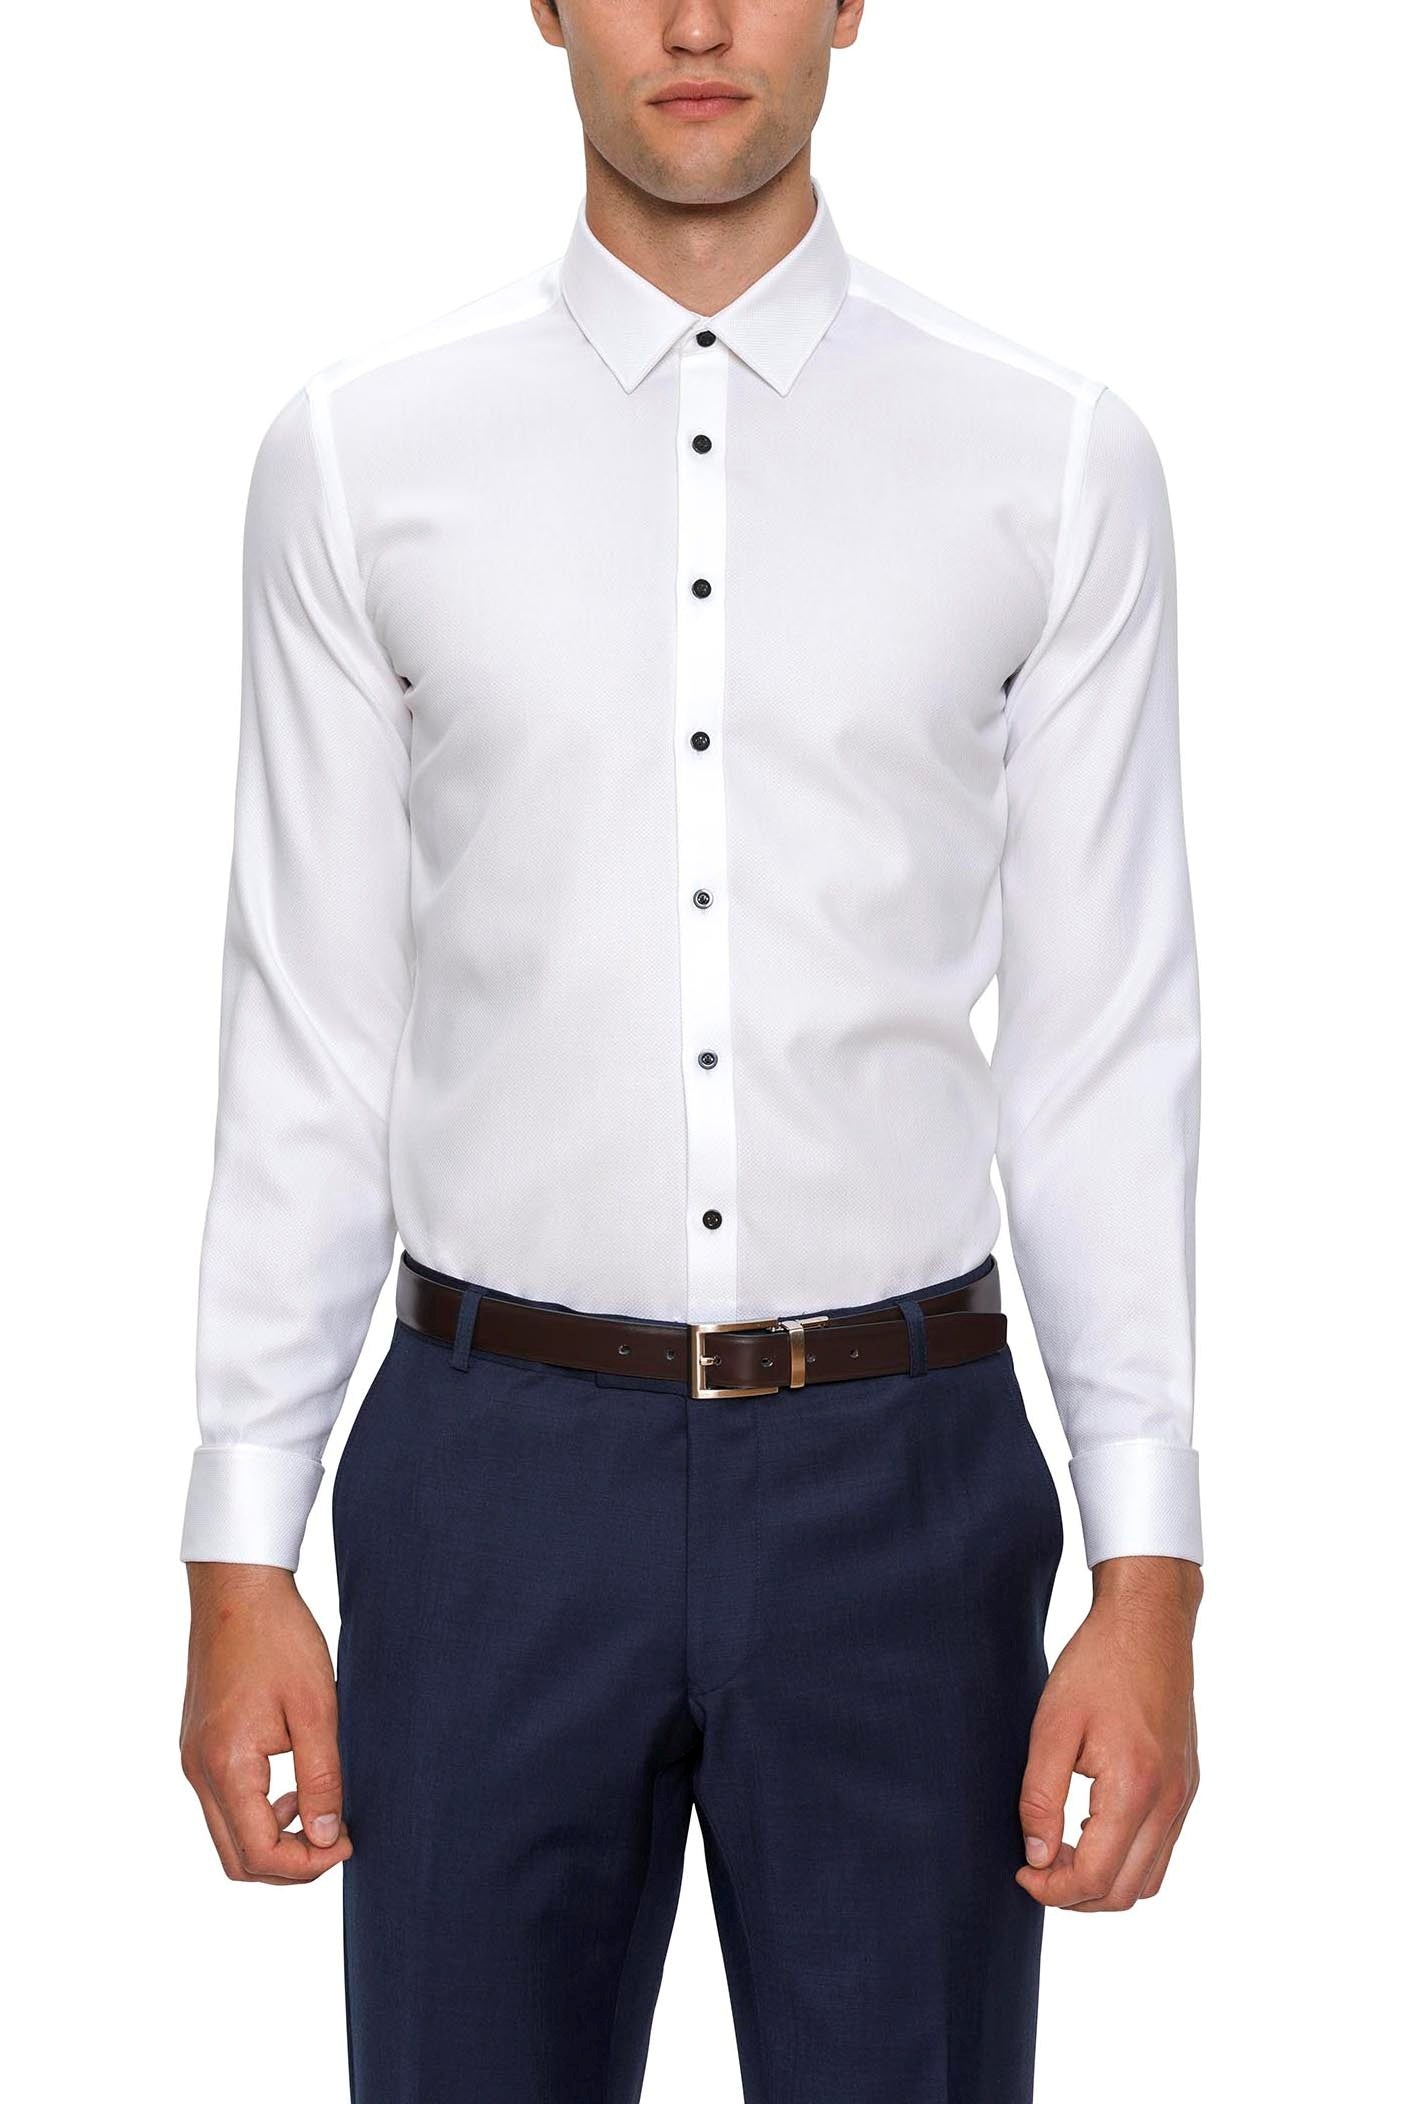 Gibson - Archie Dress Shirt - White